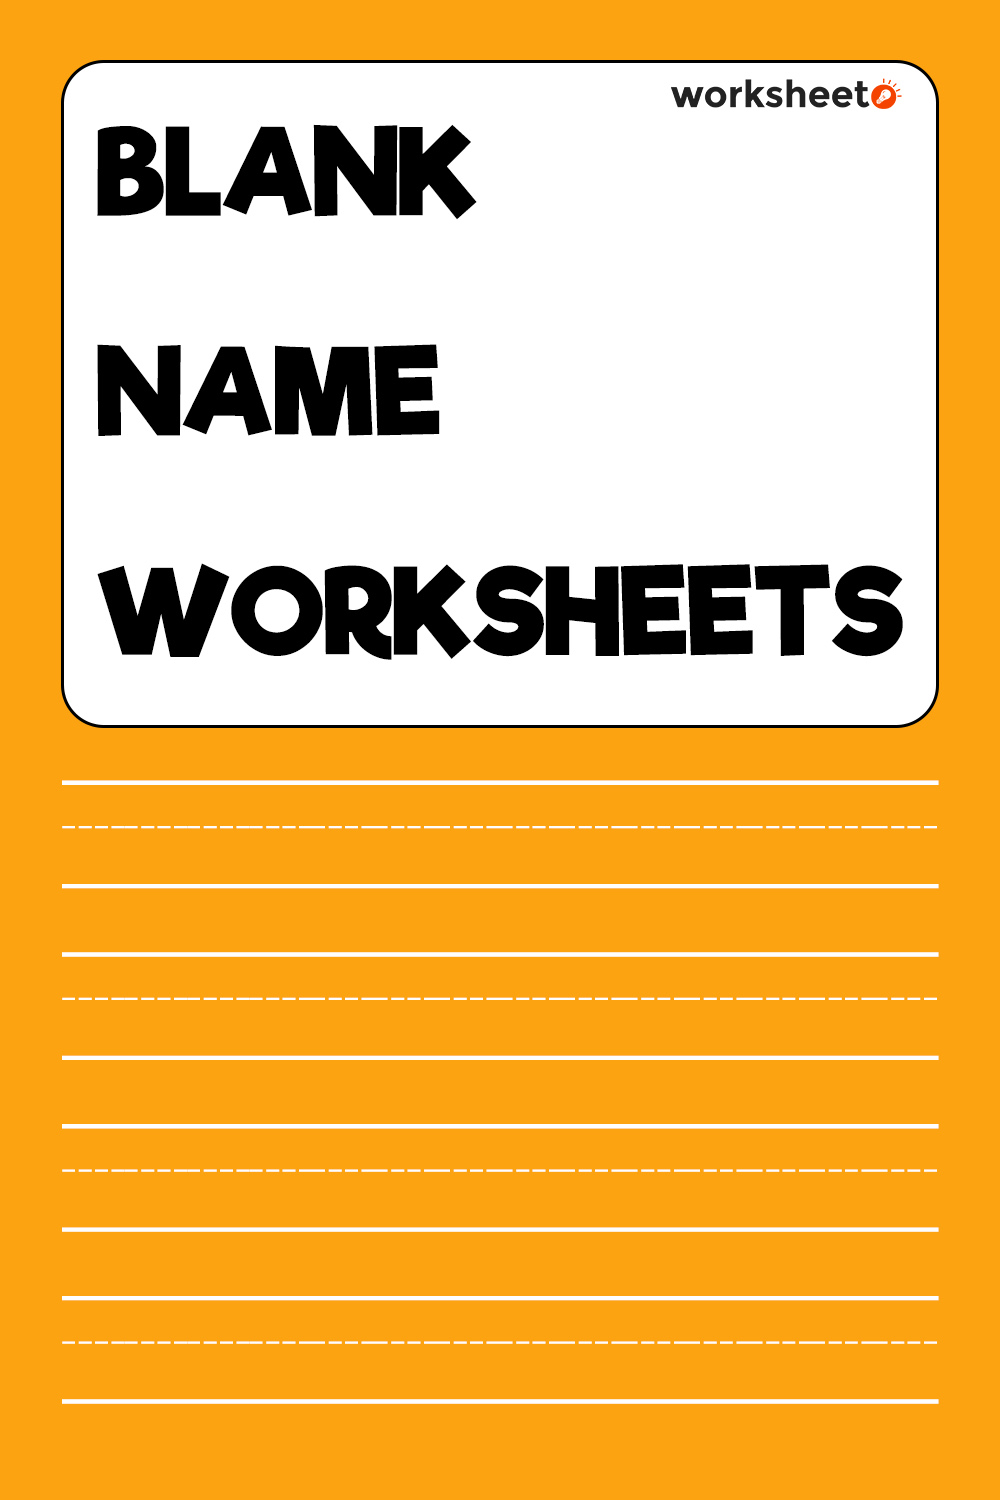 Blank Name Worksheets